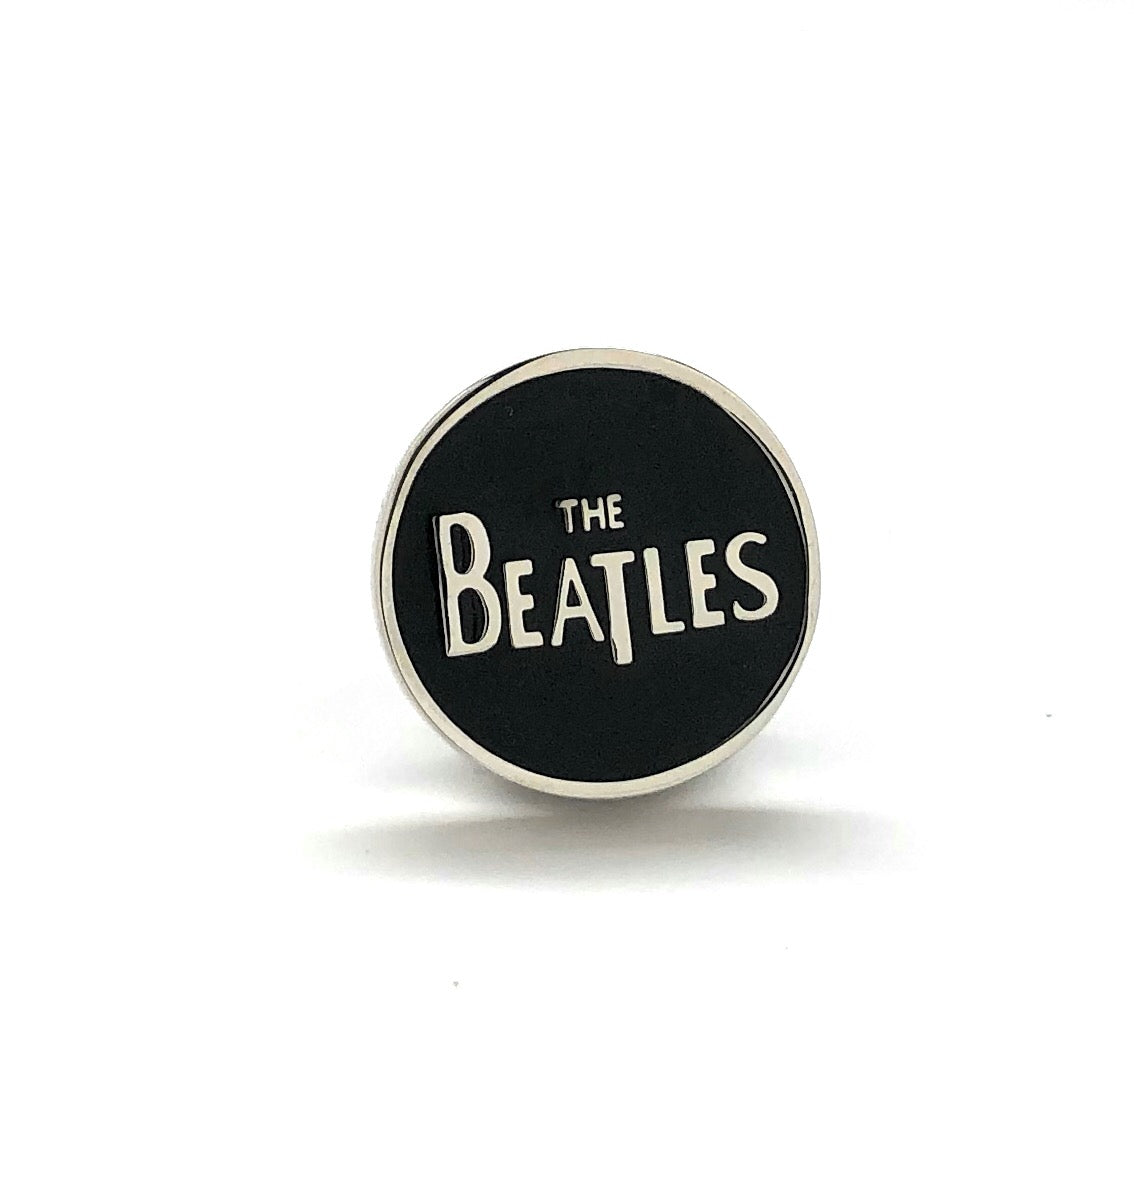 The Beatles enamel pin 